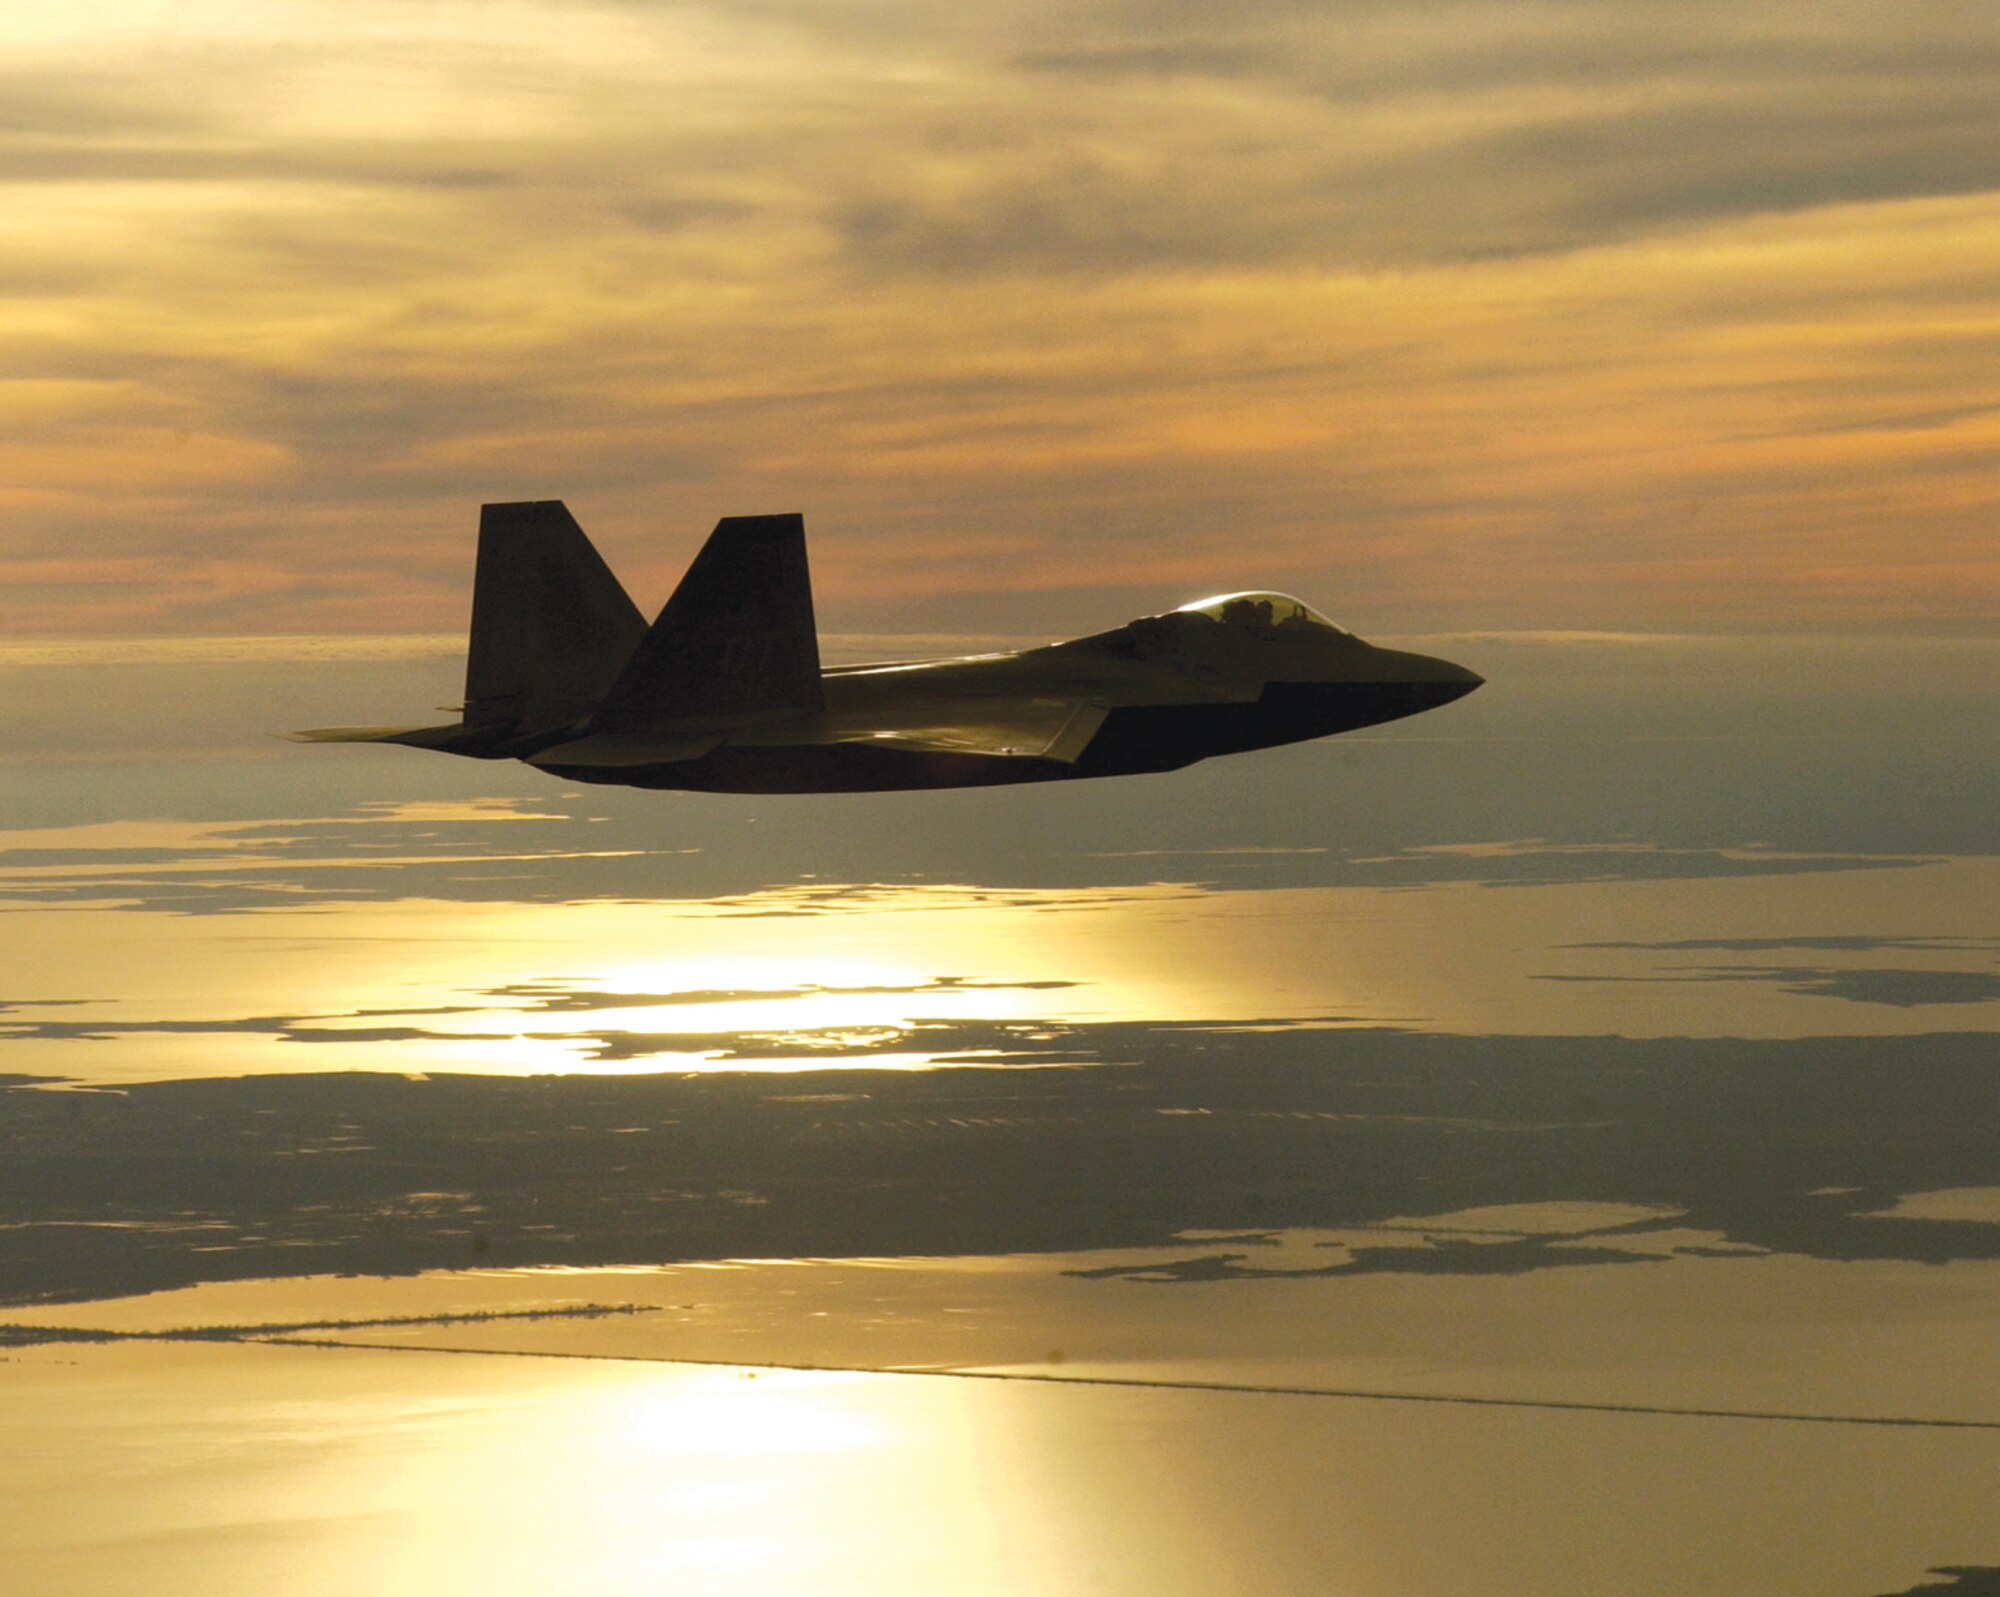 The F-22 will be a vital part of Holloman and Alamogordo's future.